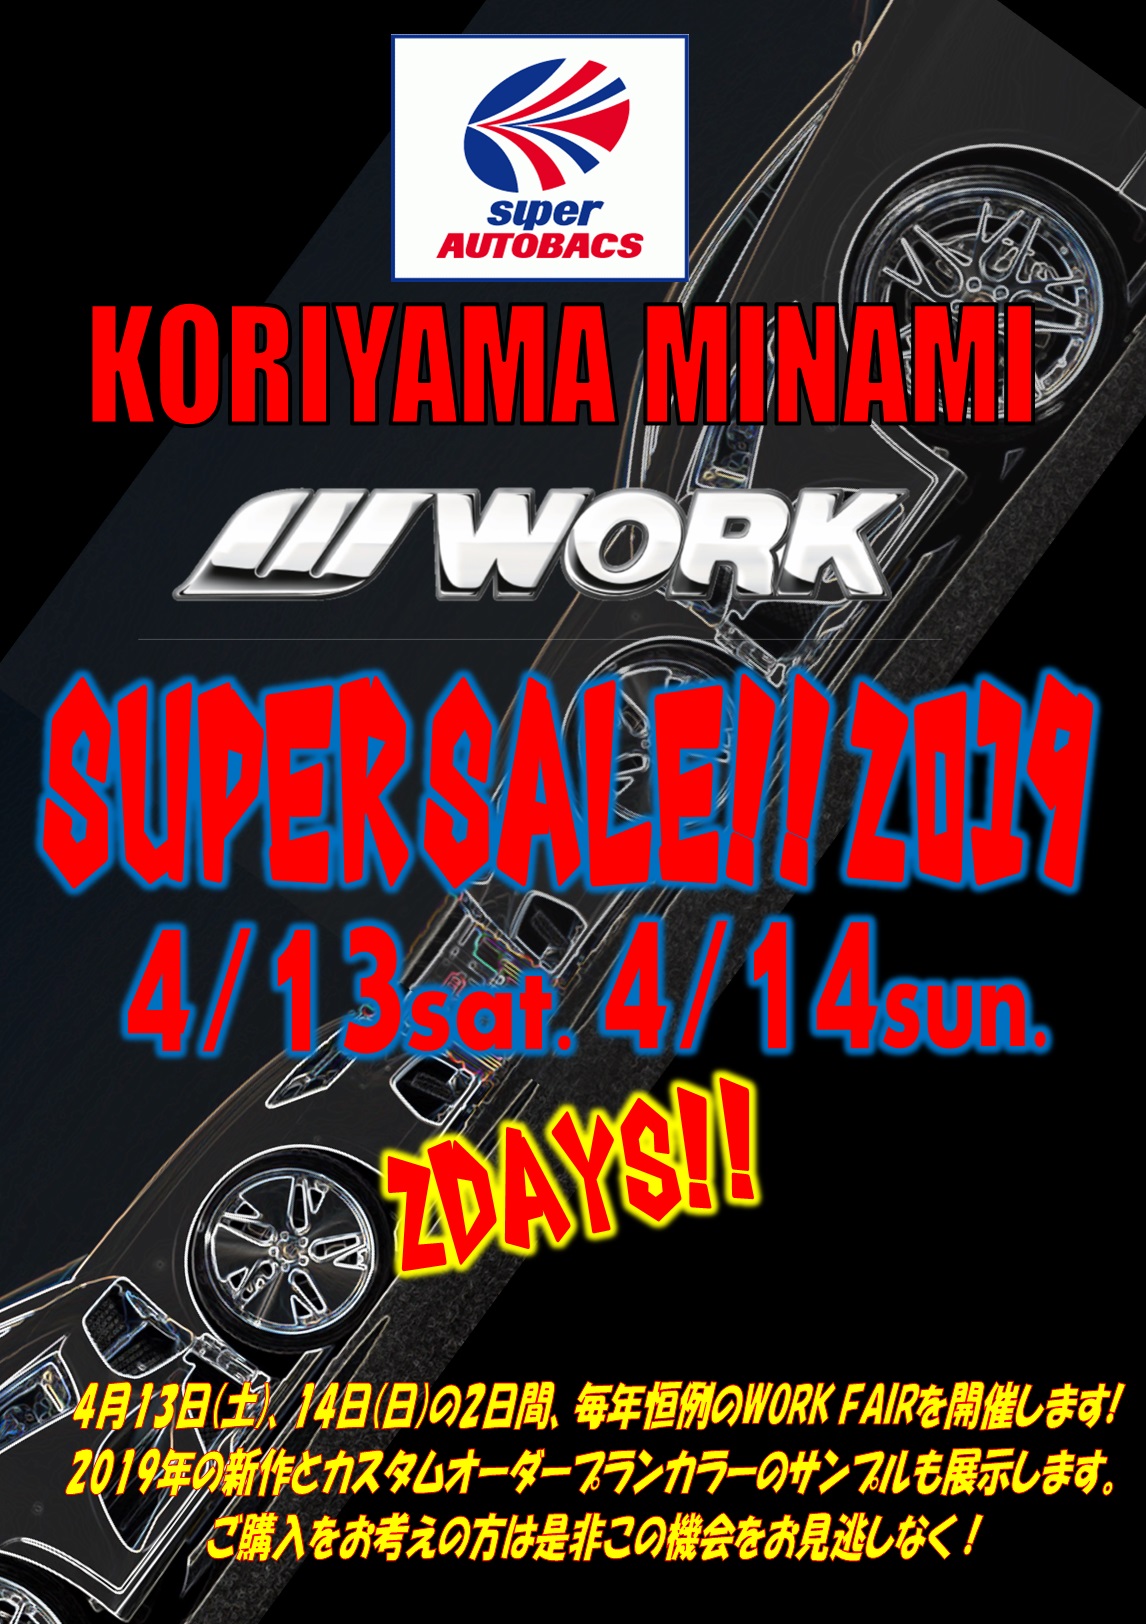 Super autobacks Koriyama Minami WORK SUPER SALE 2019